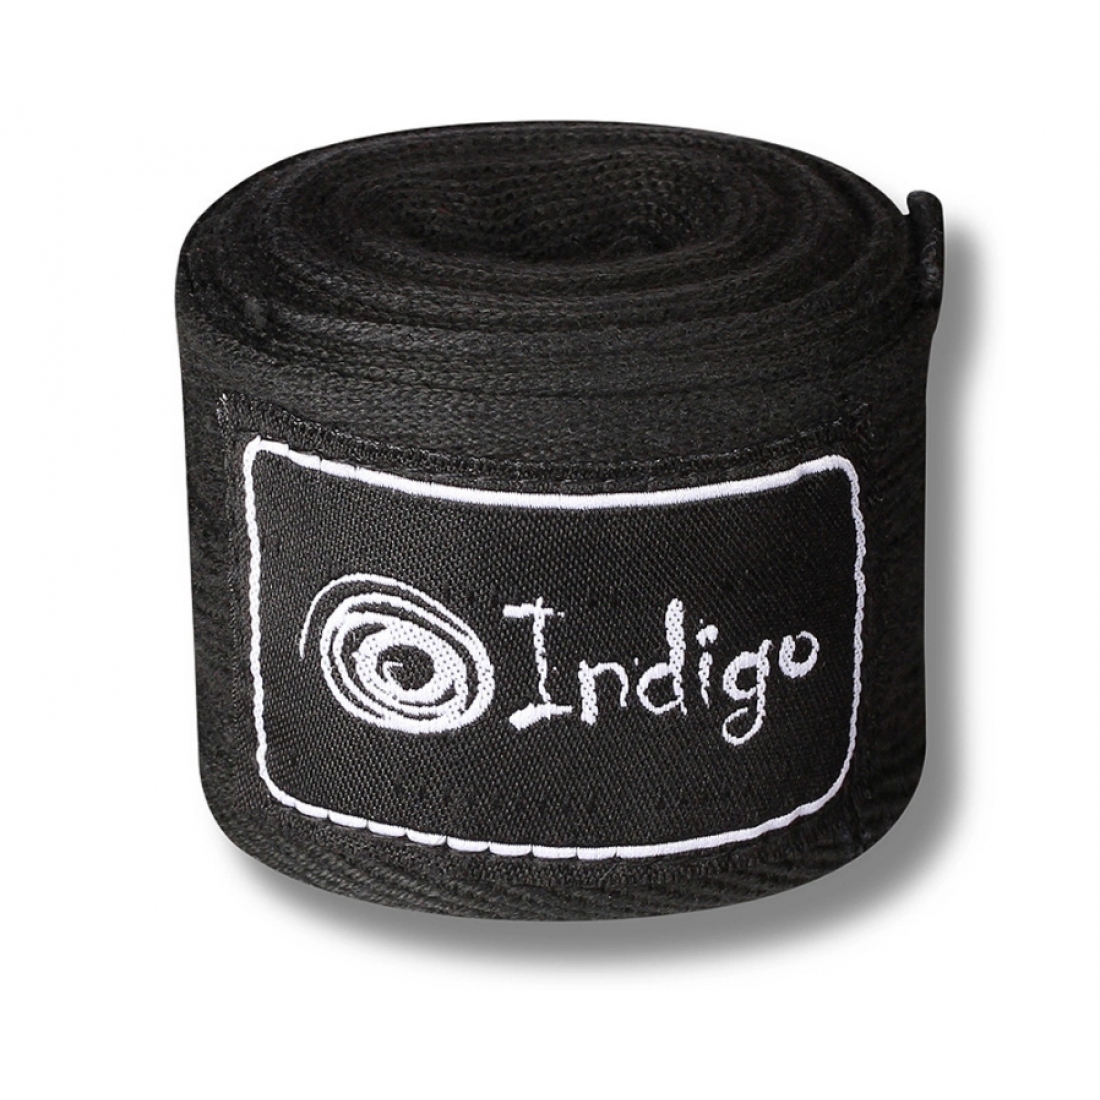 Бинты боксерские Indigo, длина 3,5 м, материал х/б, эластан, цвет черный